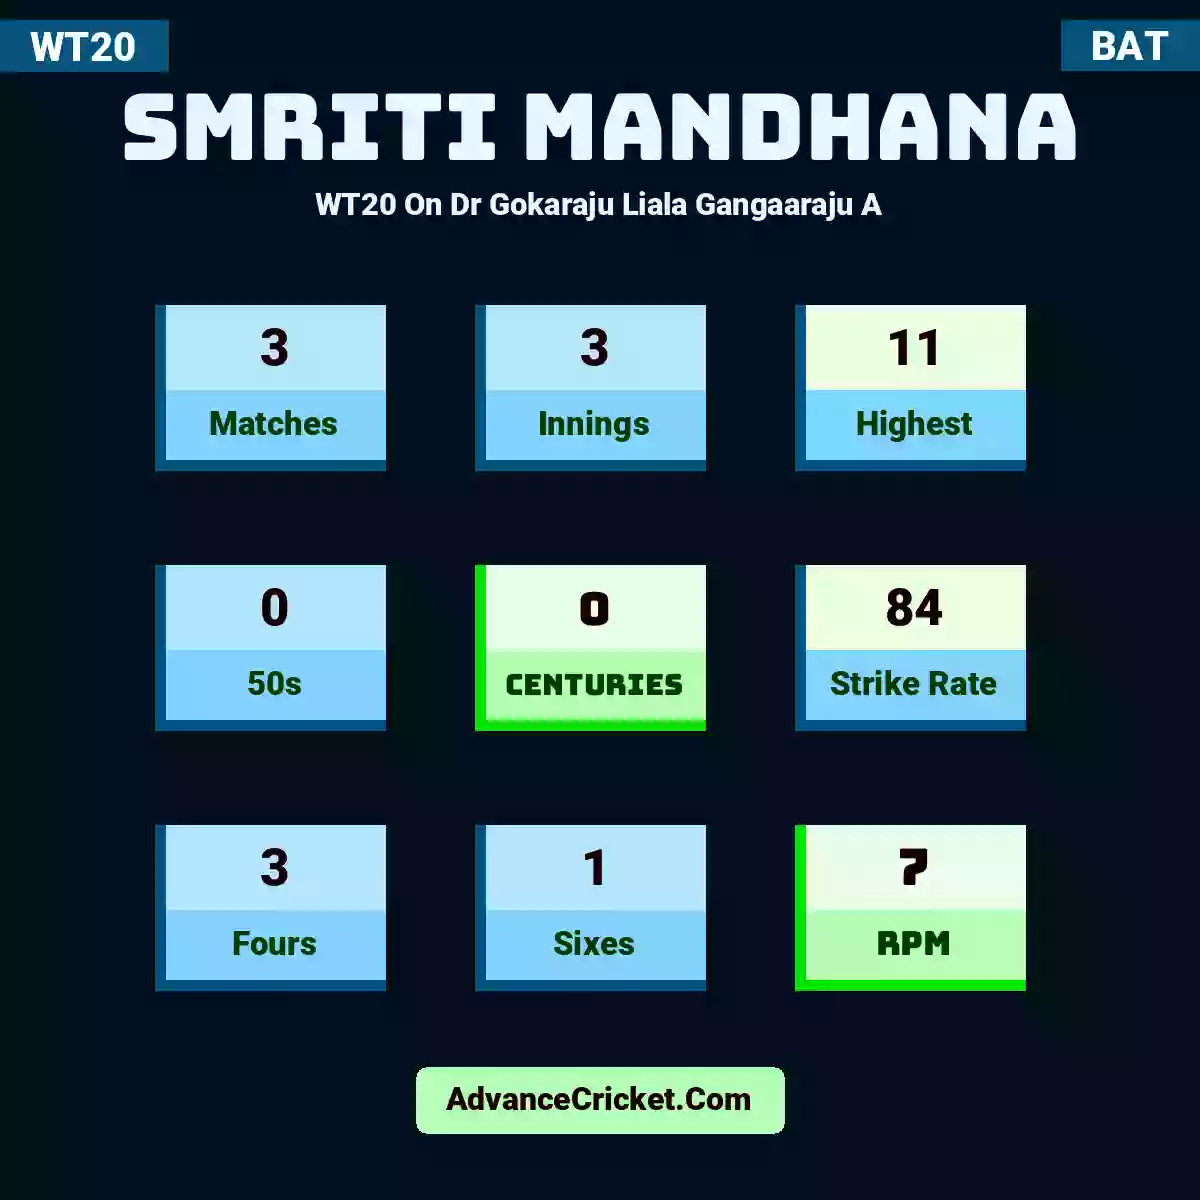 Smriti Mandhana WT20  On Dr Gokaraju Liala Gangaaraju A, Smriti Mandhana played 3 matches, scored 11 runs as highest, 0 half-centuries, and 0 centuries, with a strike rate of 84. S.Mandhana hit 3 fours and 1 sixes, with an RPM of 7.